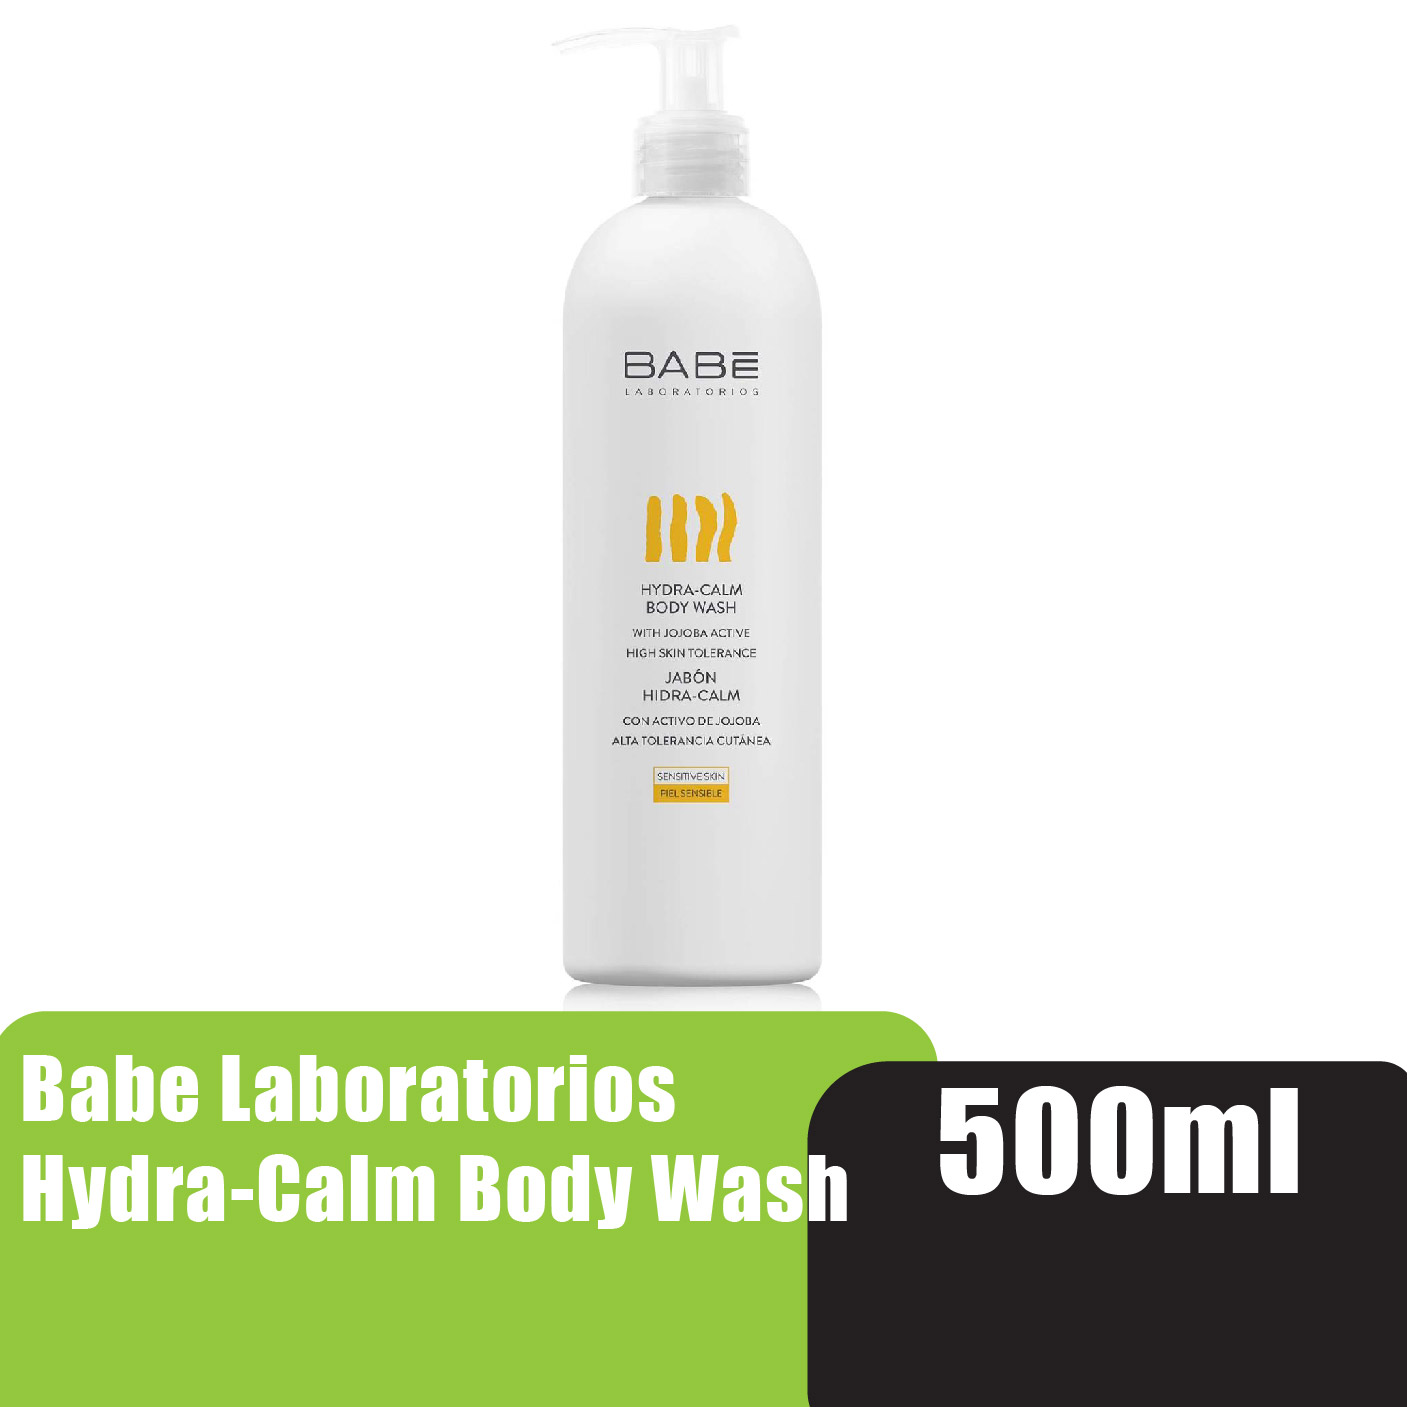 BABE LABORATORIOS Hydra-Calm Body Wash 500ml with Jojoba Oil for Moisturizing & Soothing Sensitive Skin Body Wash